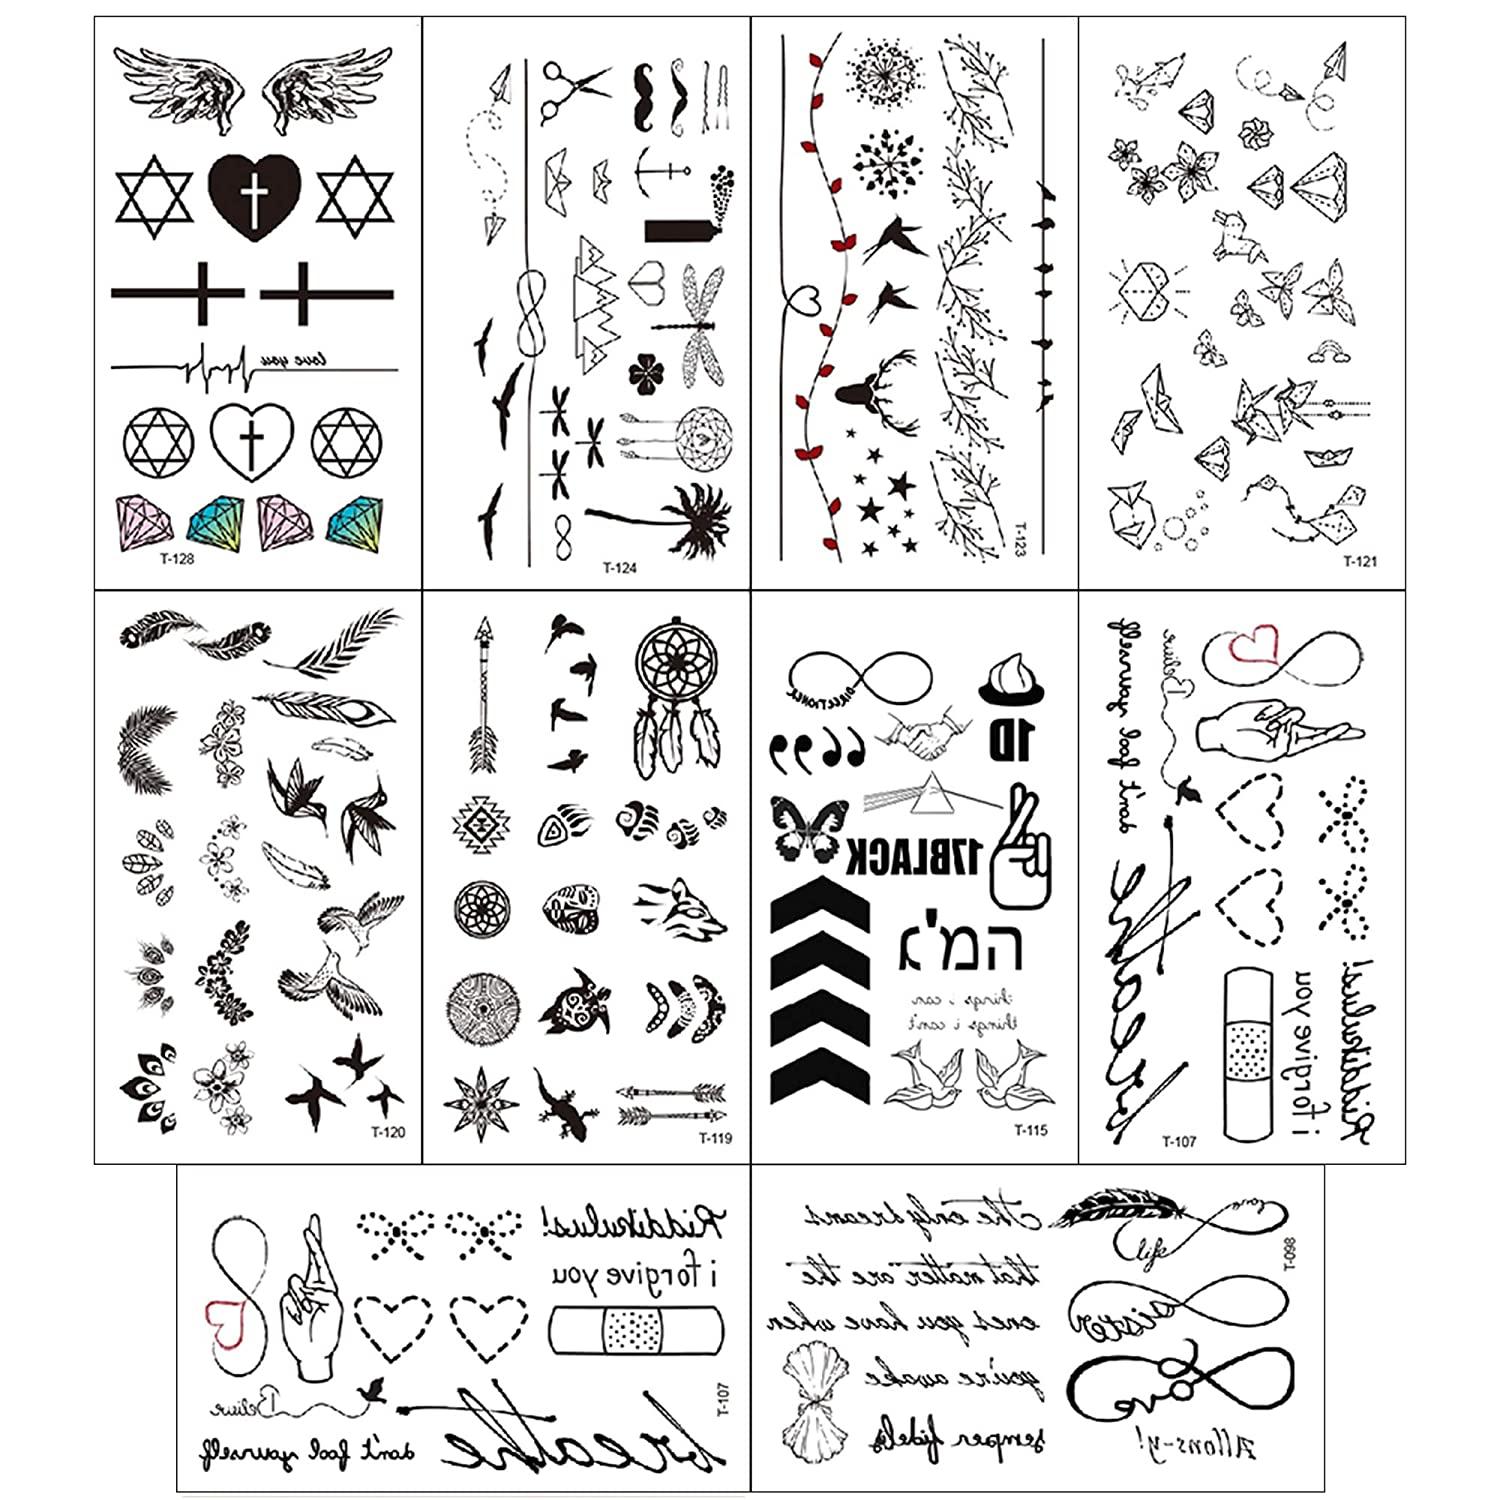 wrist tattoo ideas male | via DotWallpapers.net dotwallpaper… | Flickr